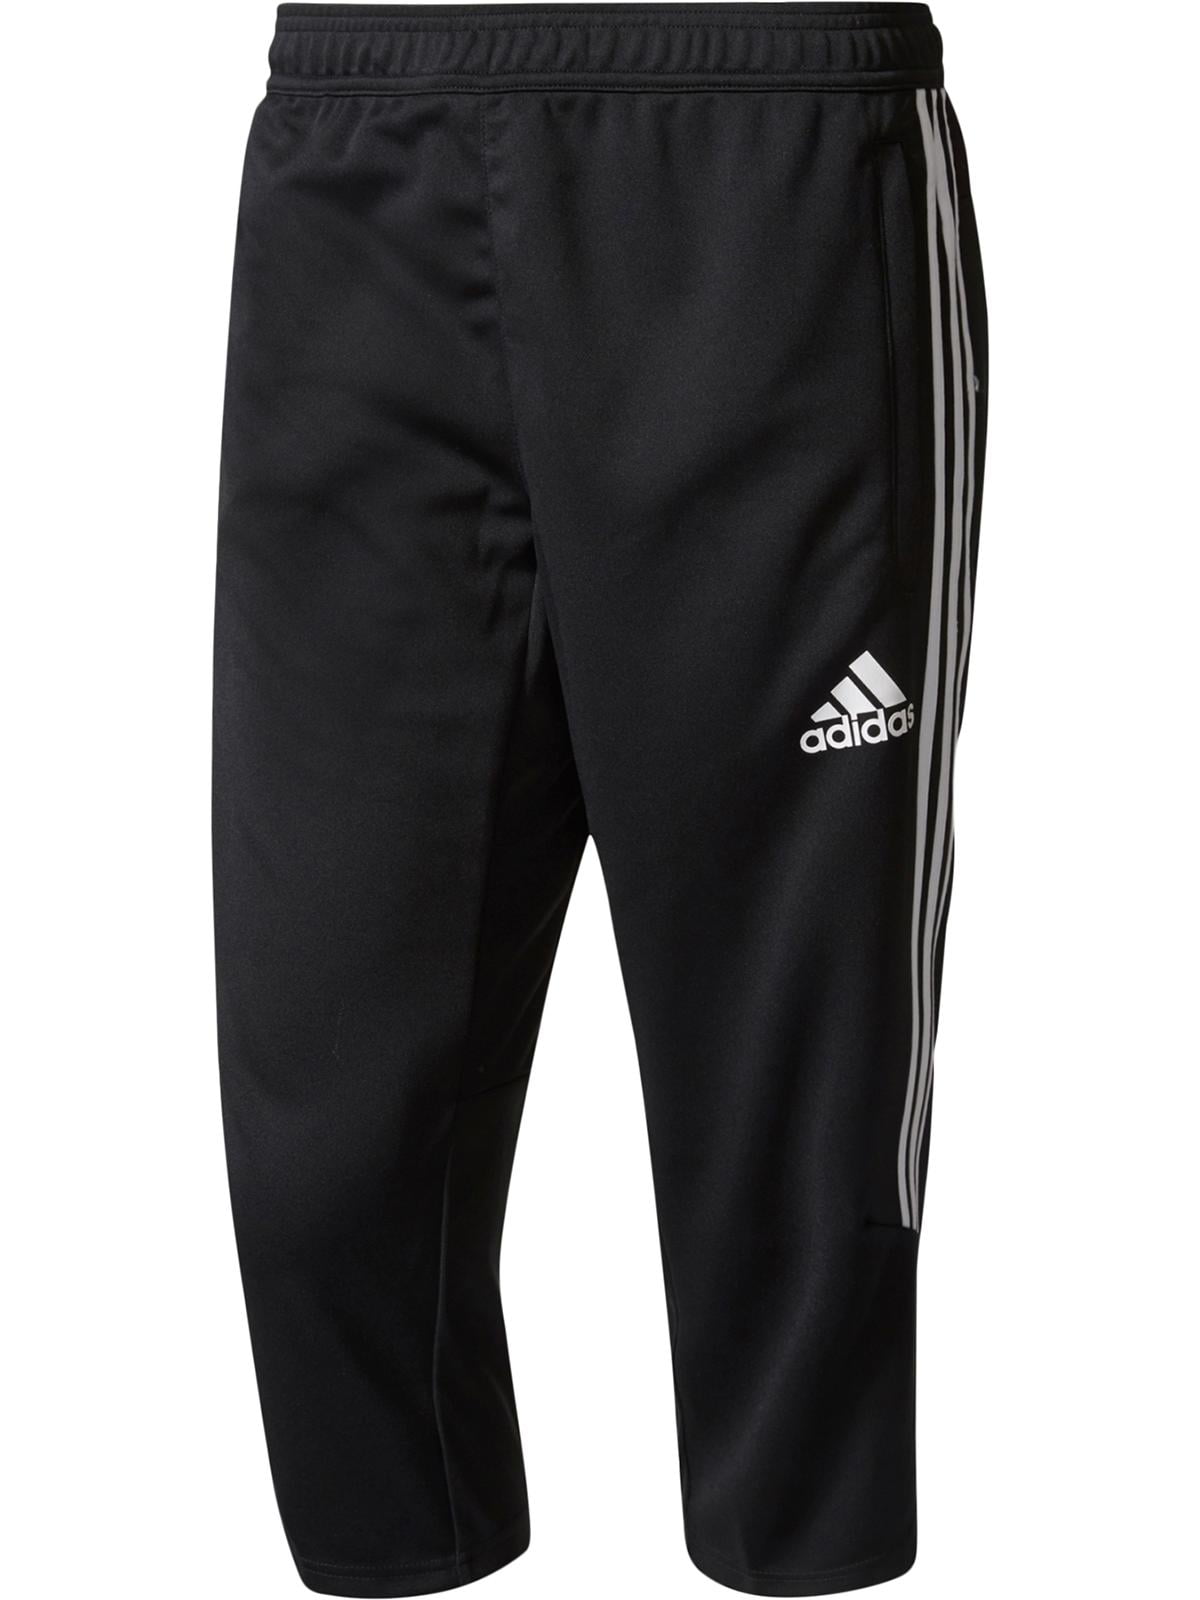 adidas tiro cropped soccer pants